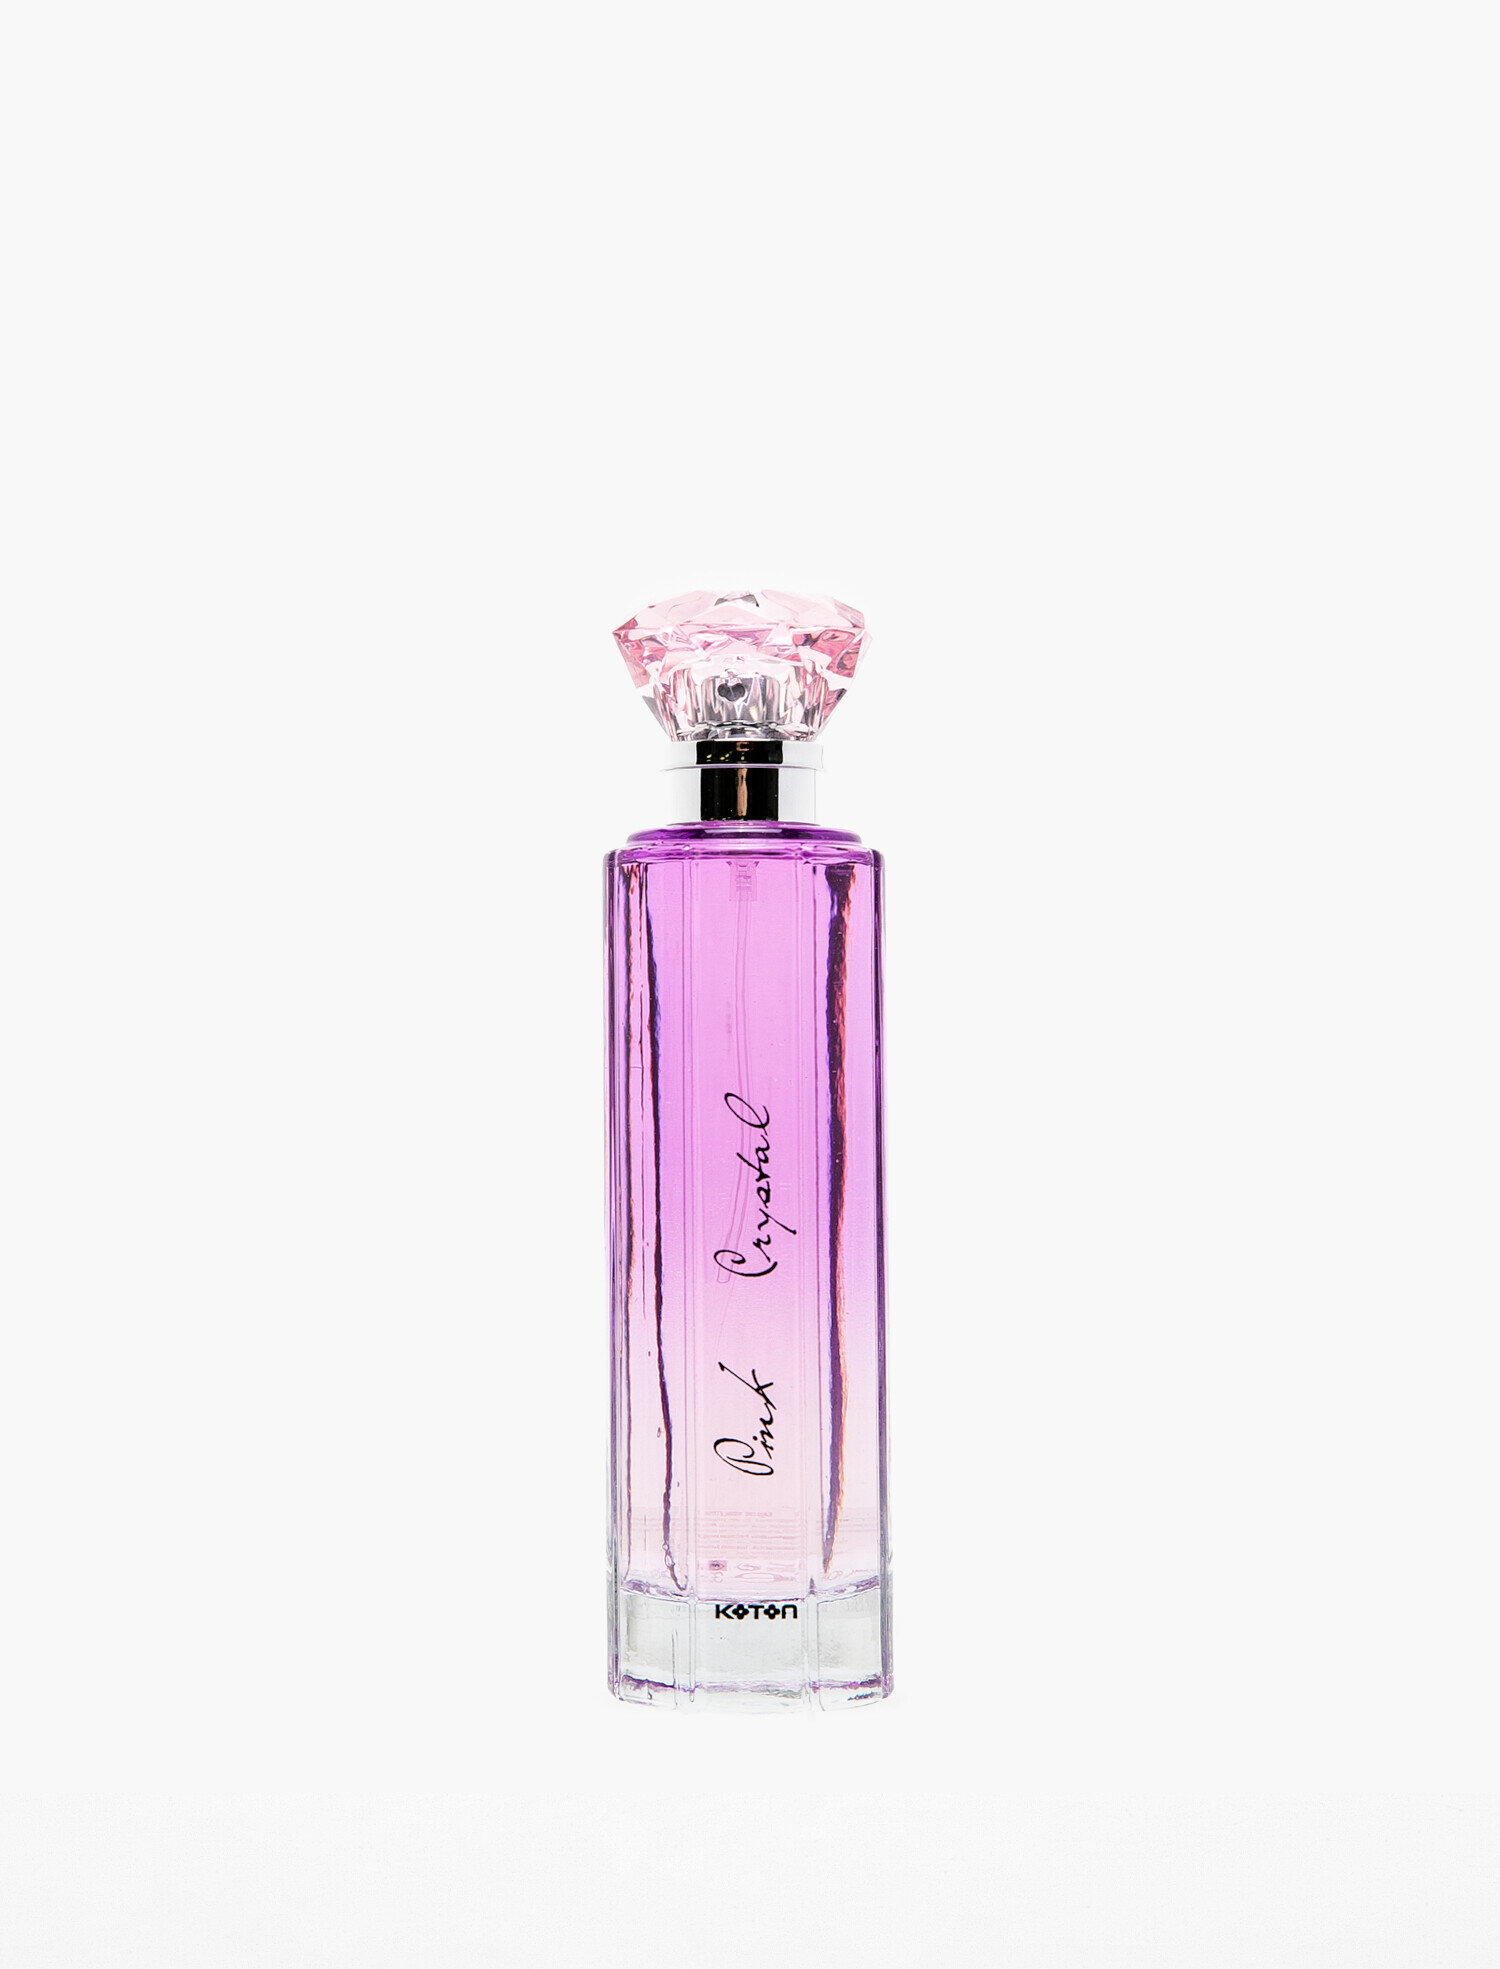 pink crystal perfume